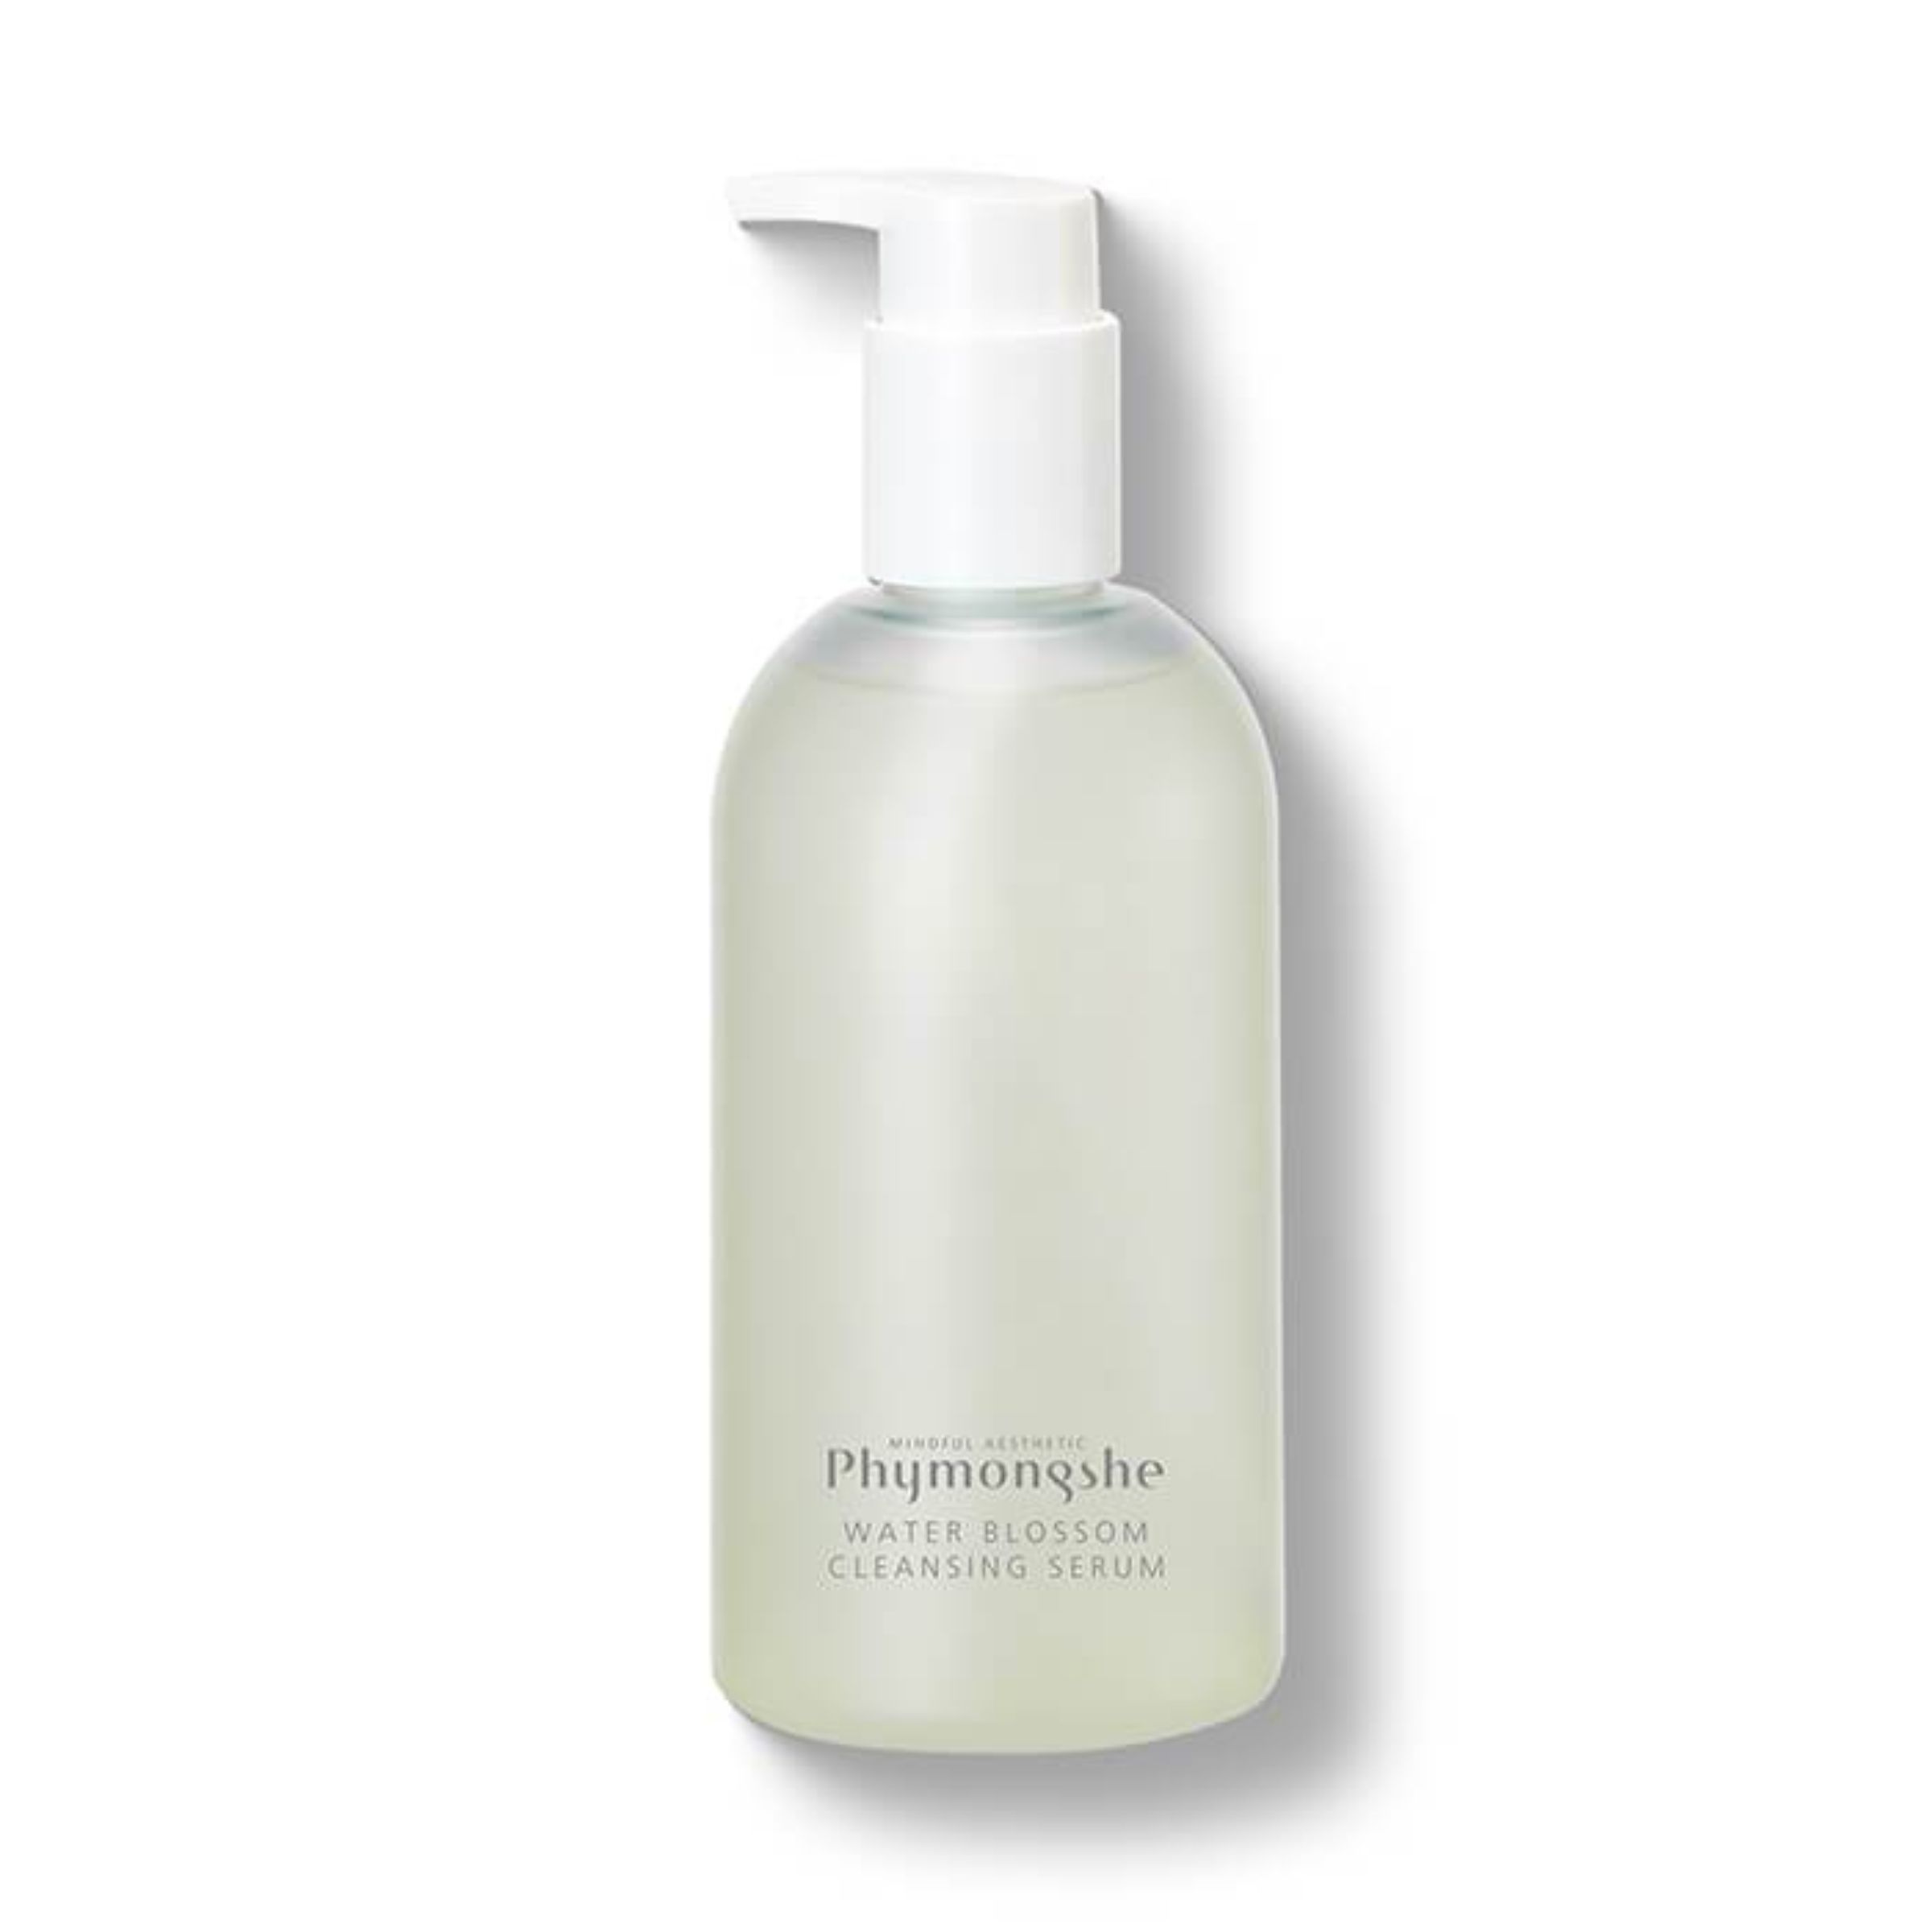 Phymongshe - Water Blossom Cleansing Serum